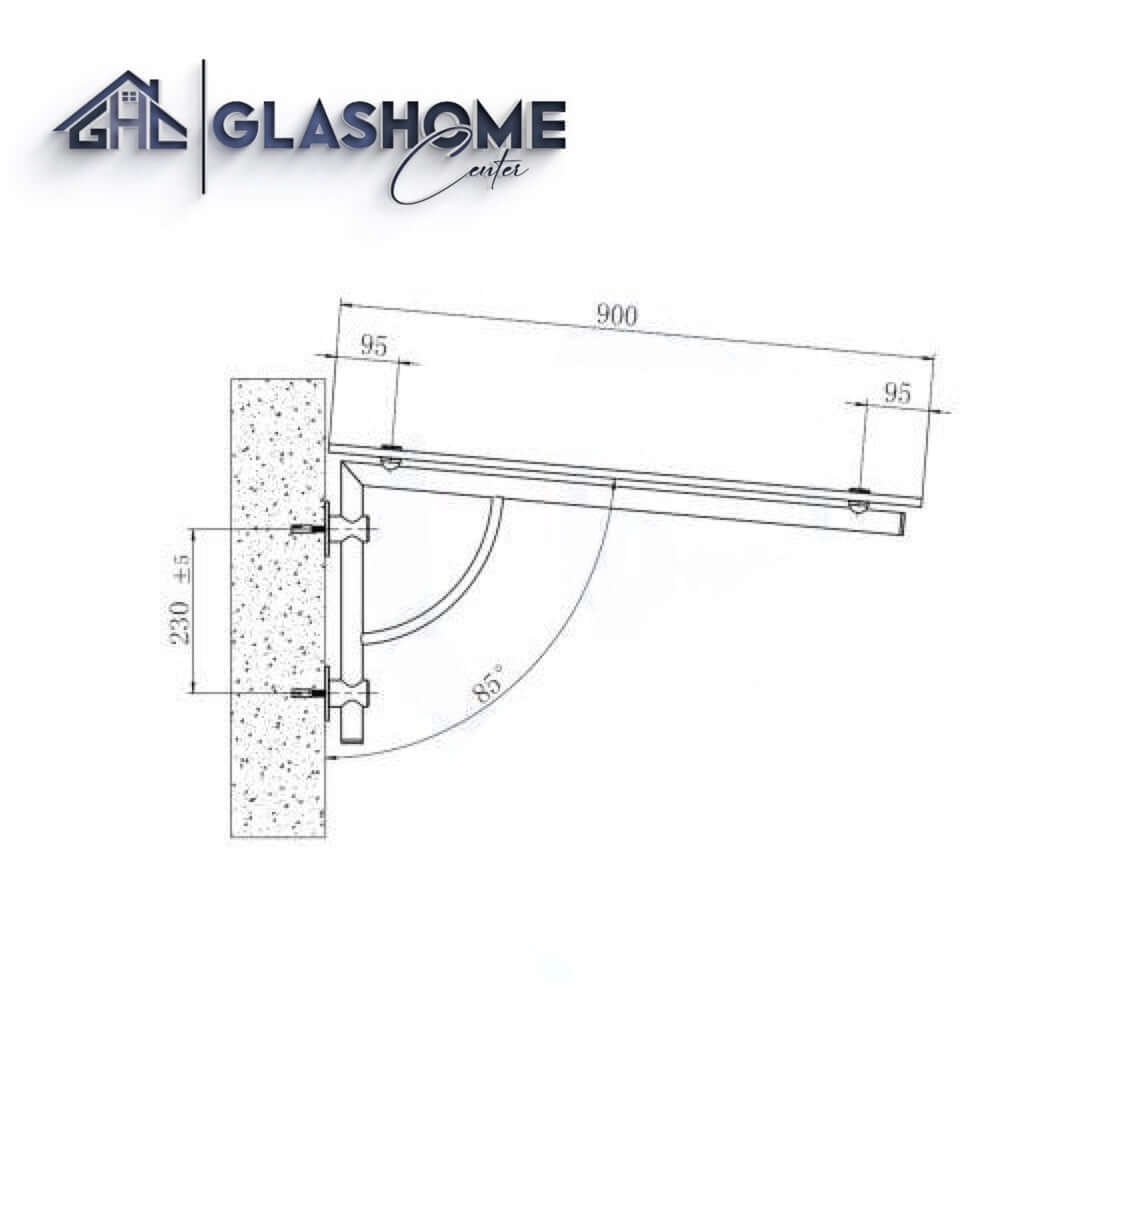 GlasHomeCenter - glass canopy - Clear glass - 250x90cm - 13.1mm VSG - incl. 3 Edelstahlhalterungen Variant "Athens"